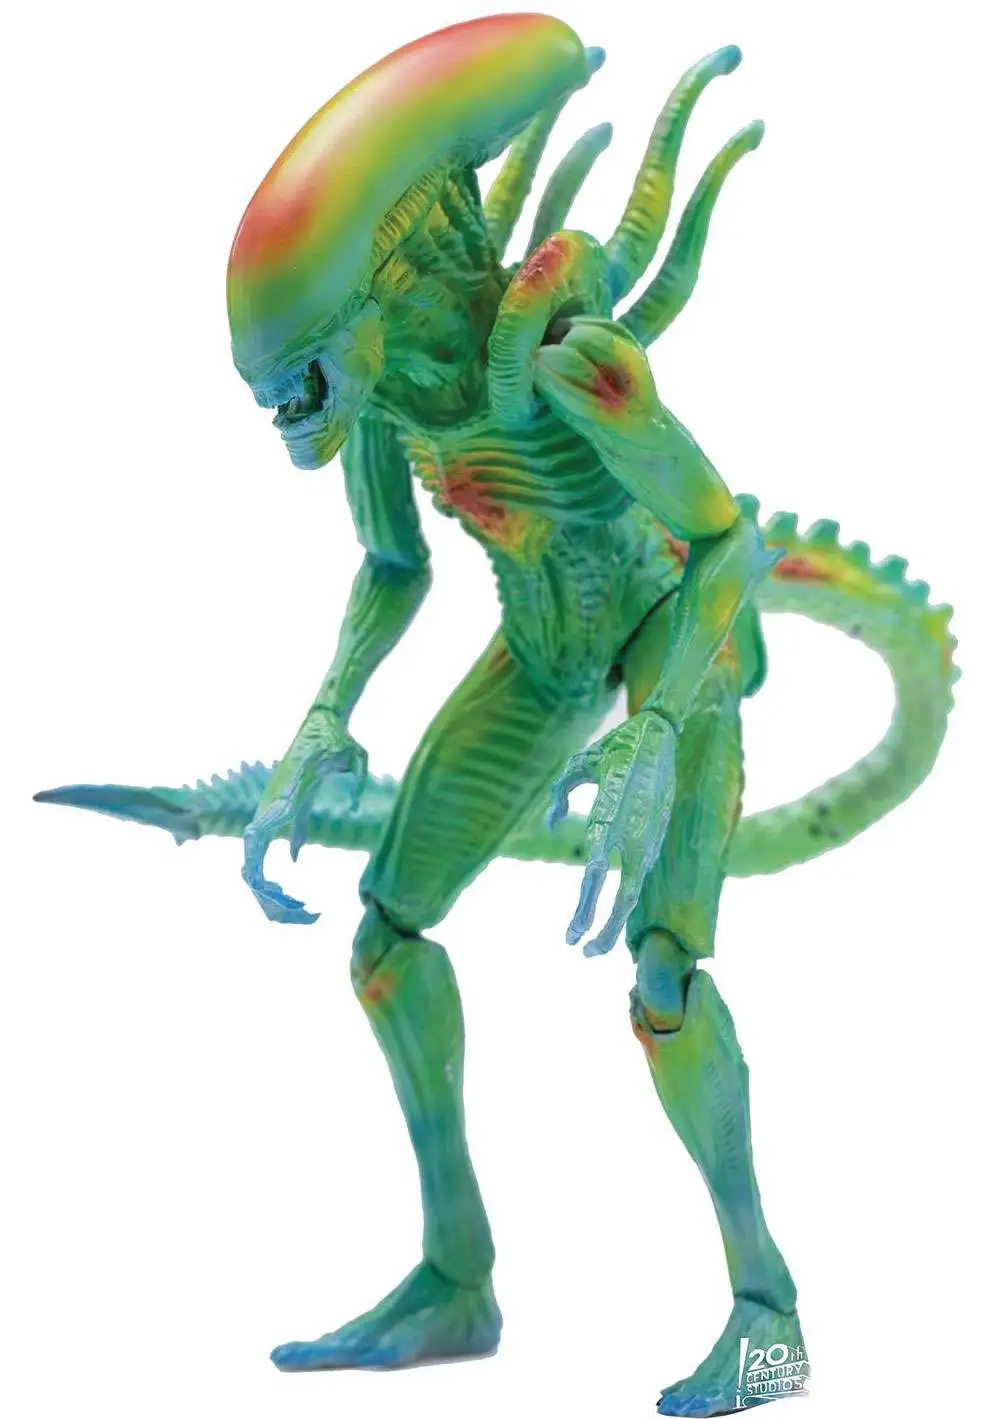 AVP Alien vs. Predator Alien Warrior Exclusive Action Figure [Thermal Vision]